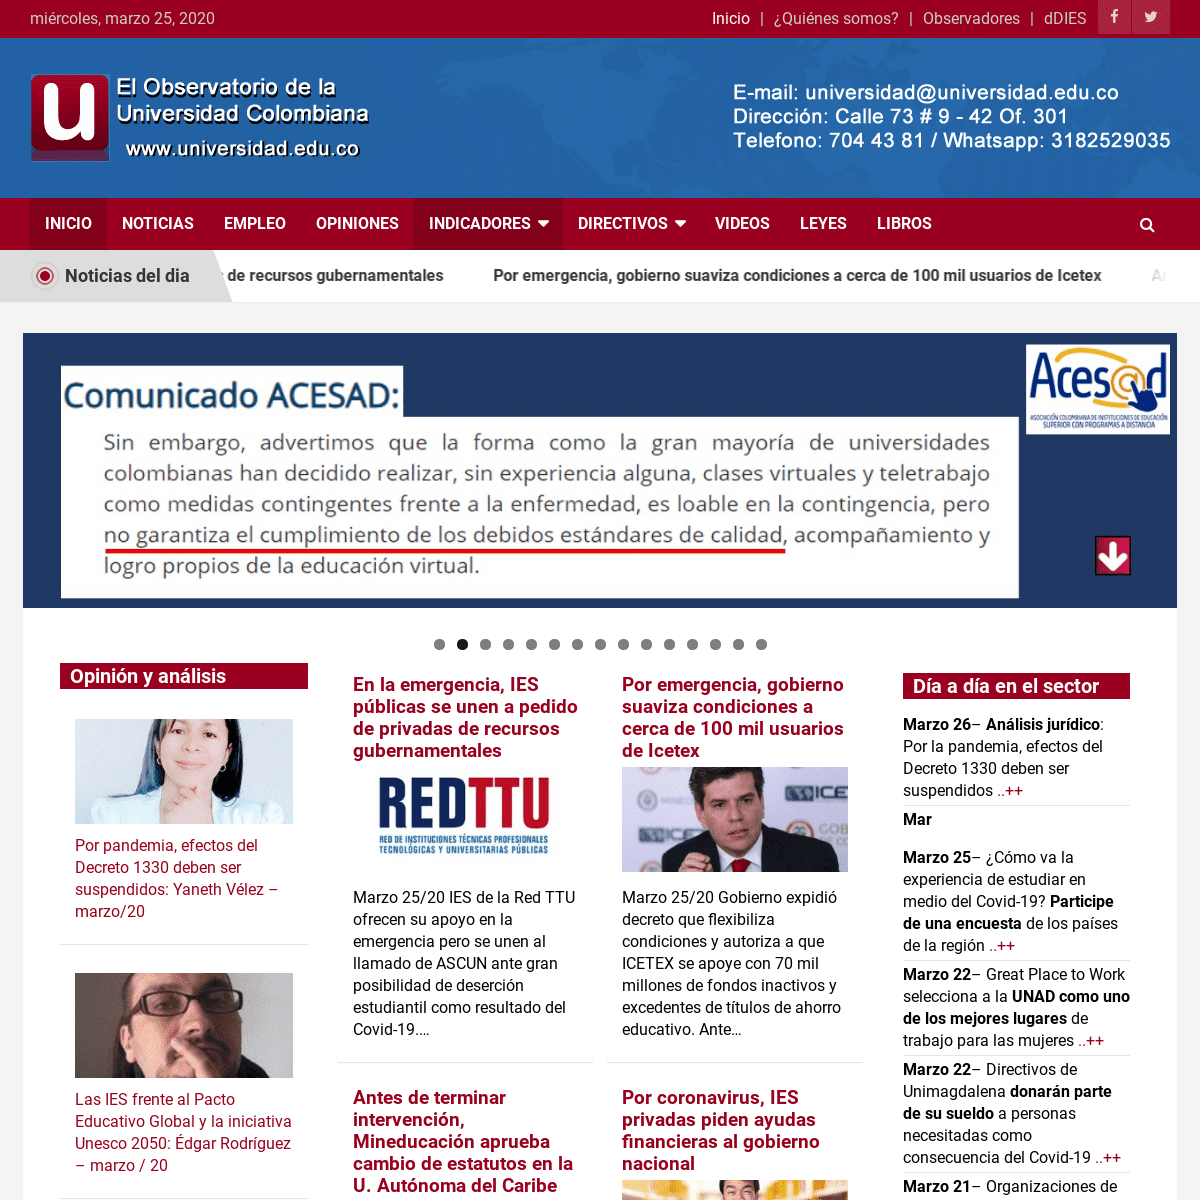 A complete backup of universidad.edu.co